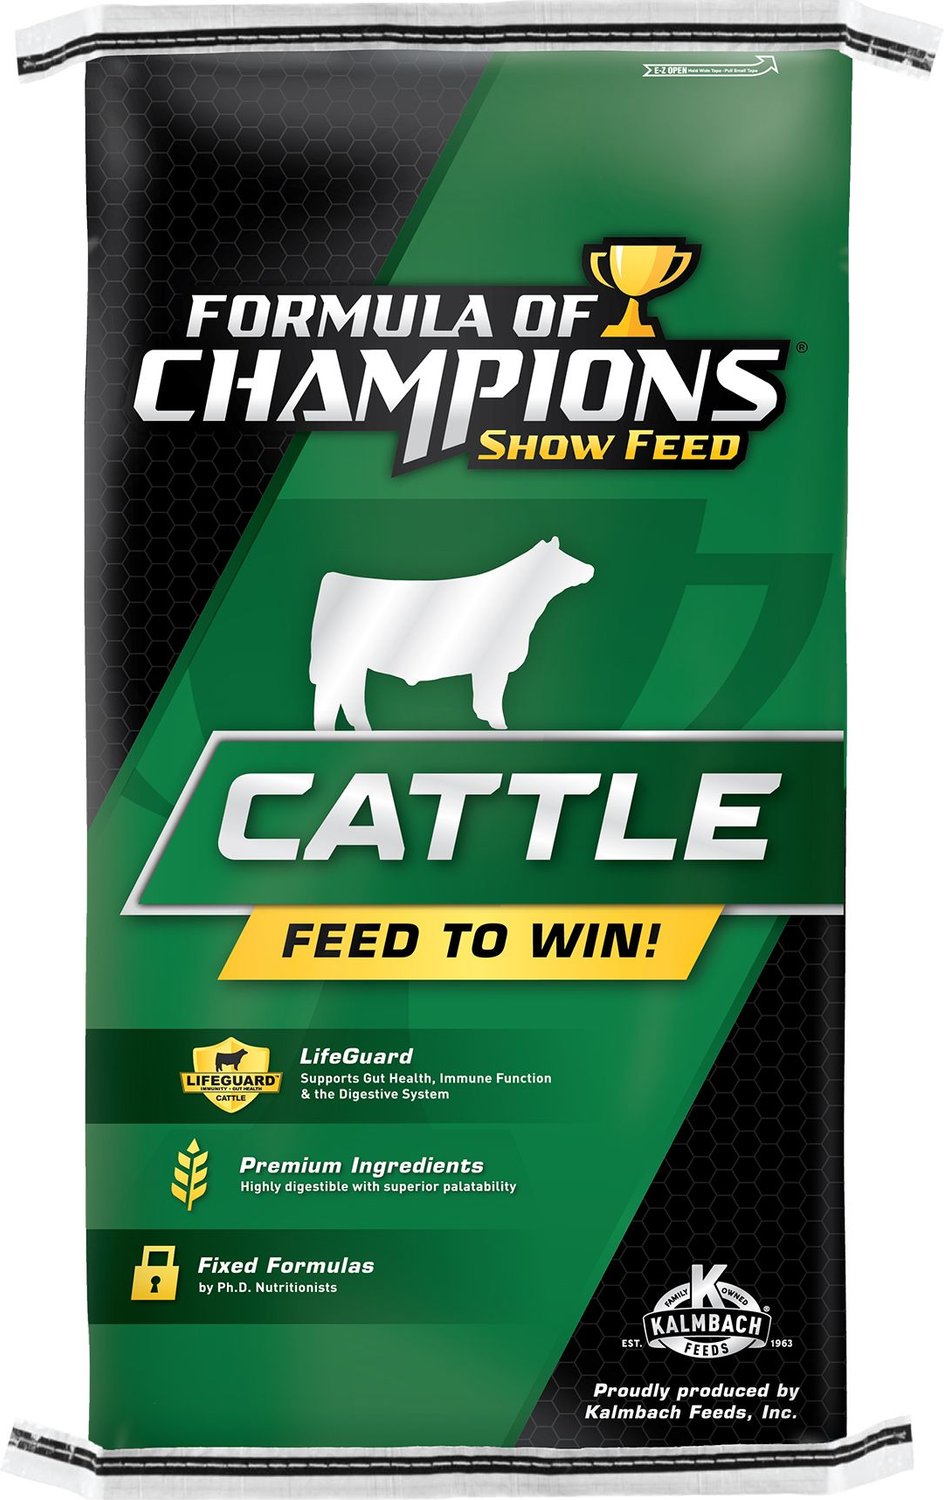 FORMULA OF CHAMPIONS Ultra Gain Show Cattle Feed, 50-lb bag 